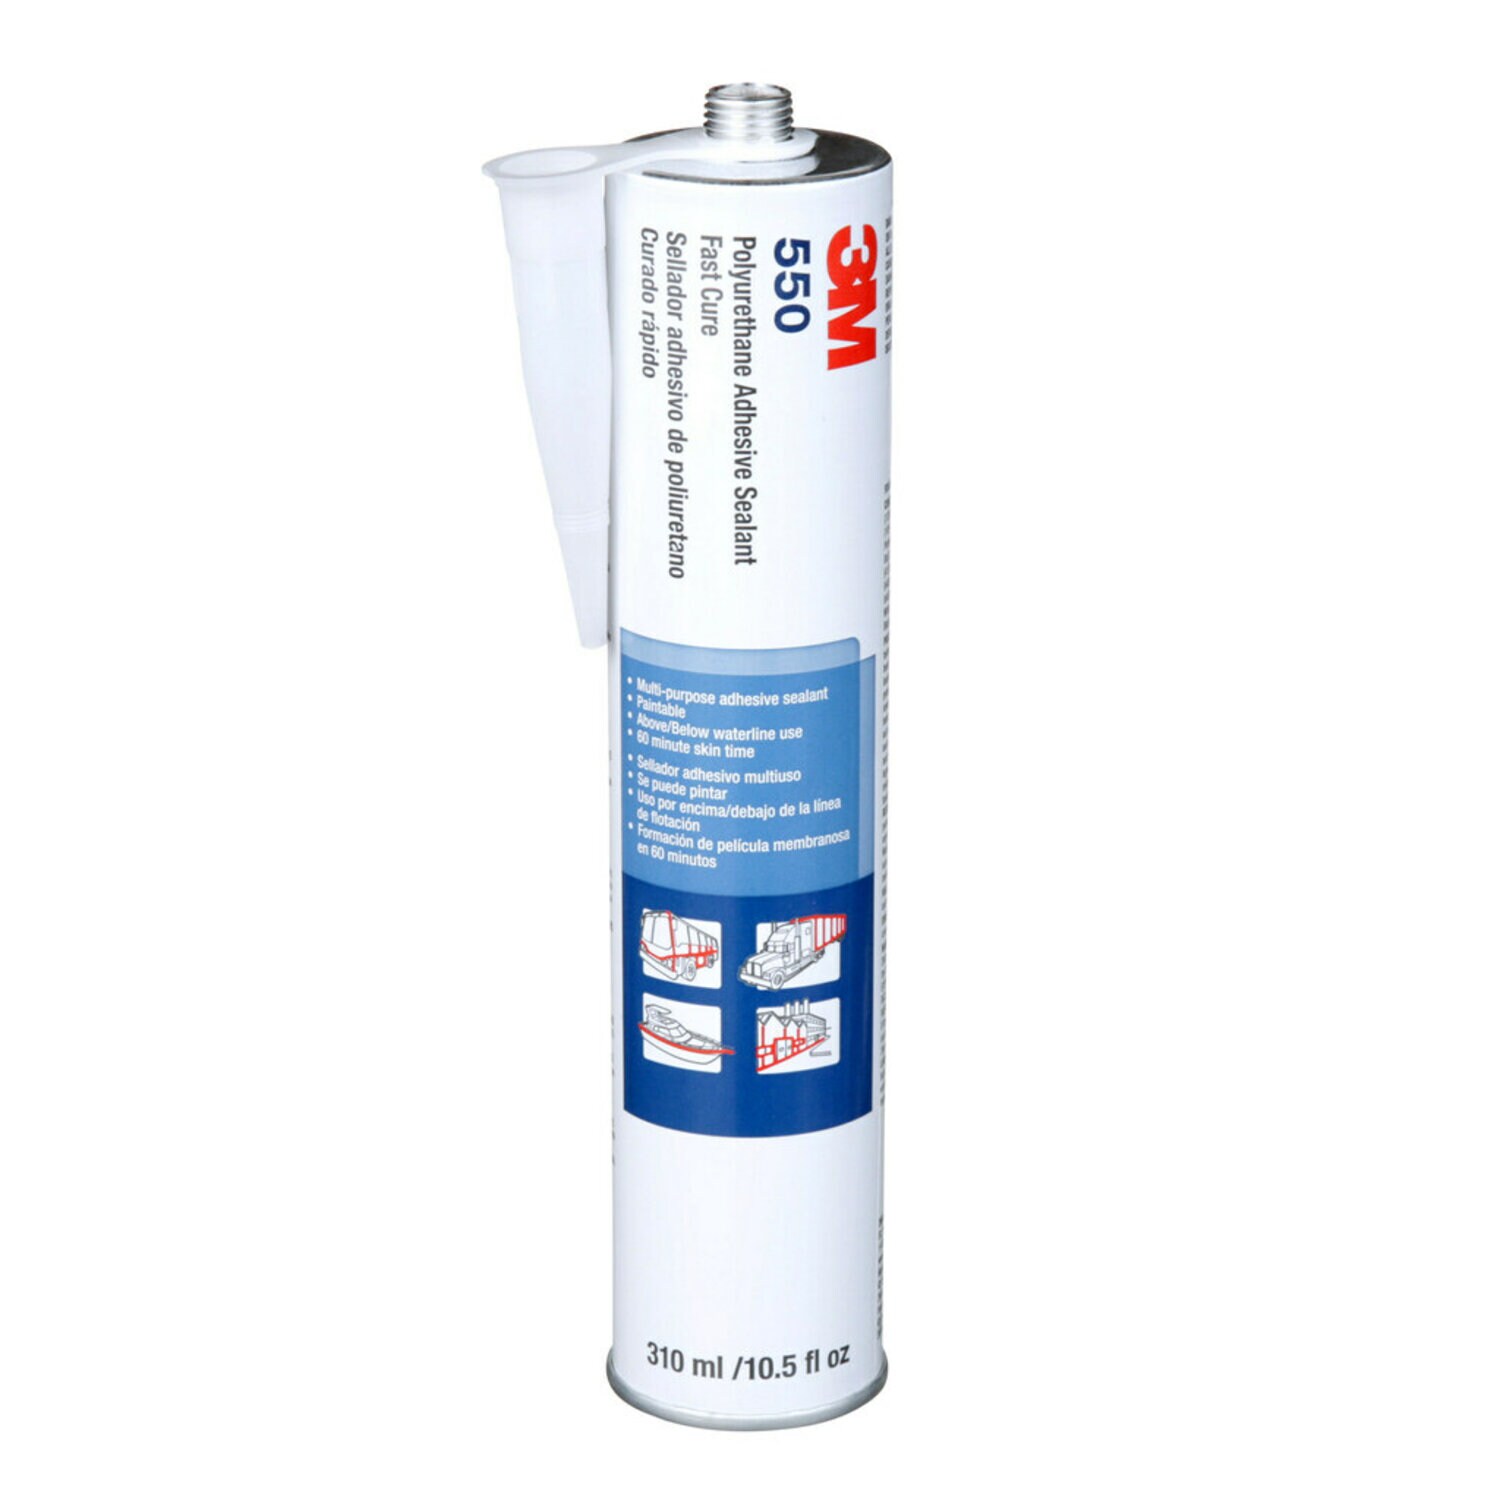 7000000932 - 3M Polyurethane Adhesive Sealant 550FC Fast Cure, White, 310 mL
Cartridge, 12/Case